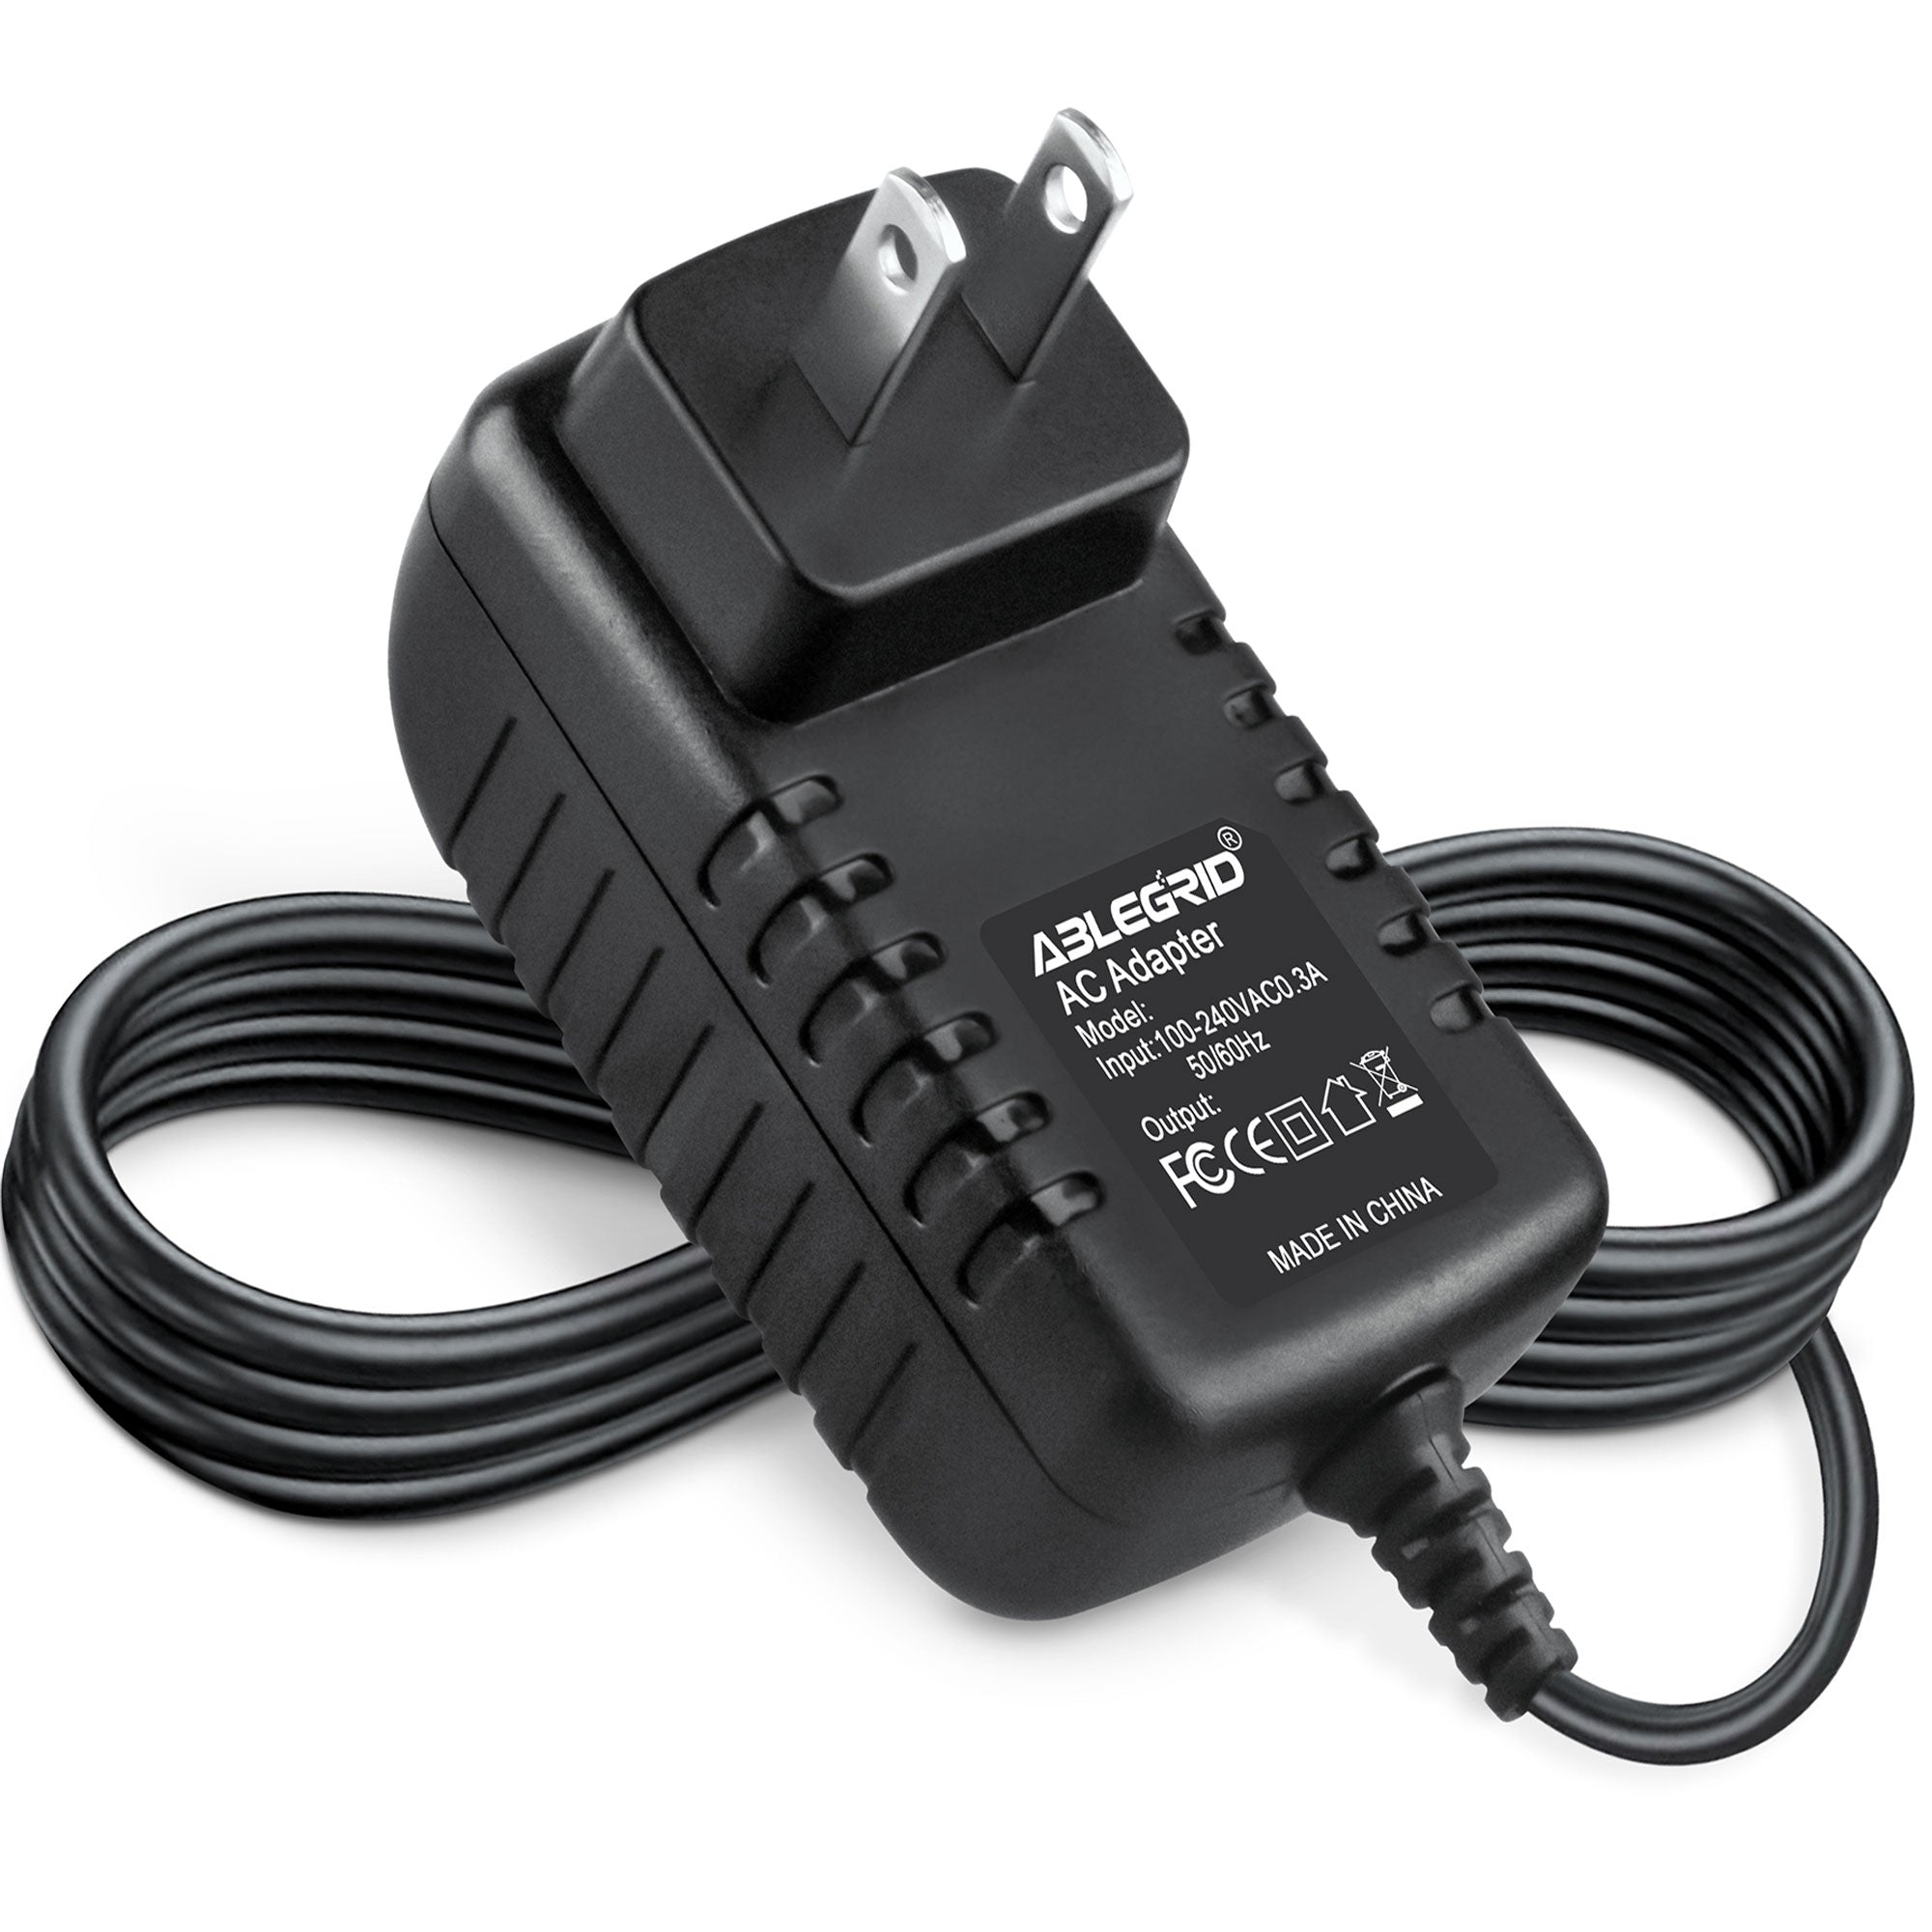 AbleGrid AC Adapter For DVE Model: DSA-0151-24 + 24V Power Supply Charger Universal